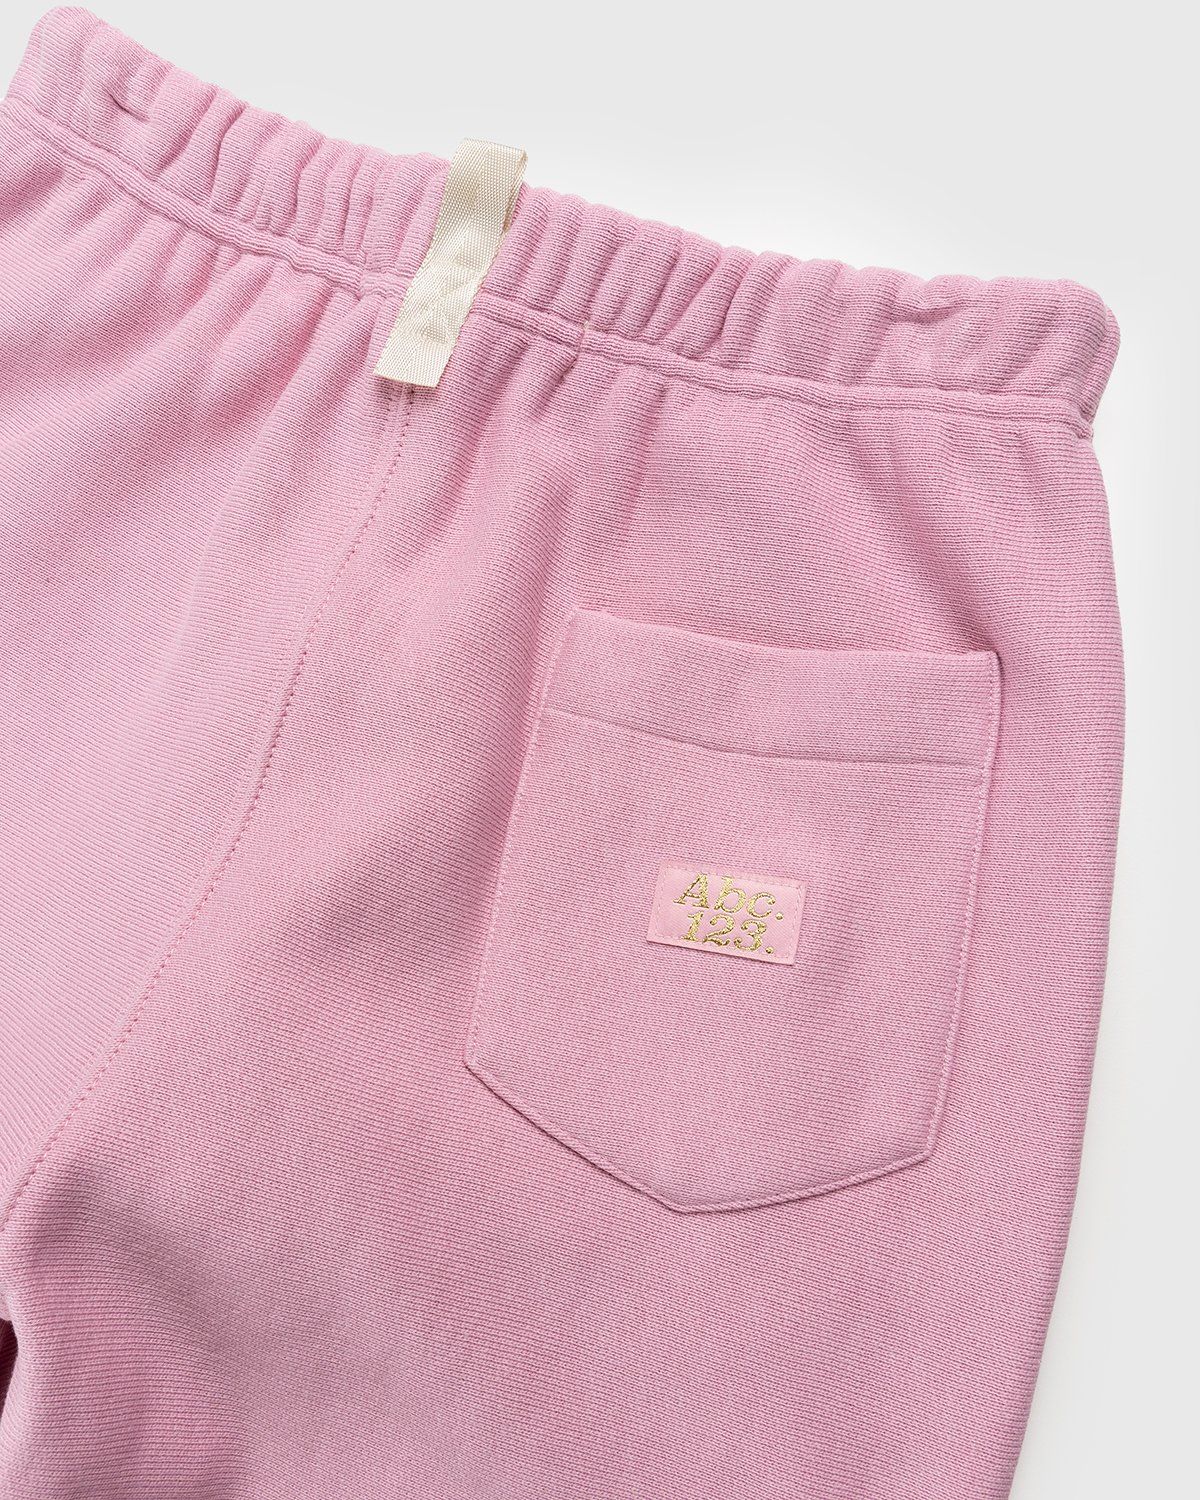 Abc. – French Terry Sweatpants Morganite - Sweatpants - Pink - Image 3